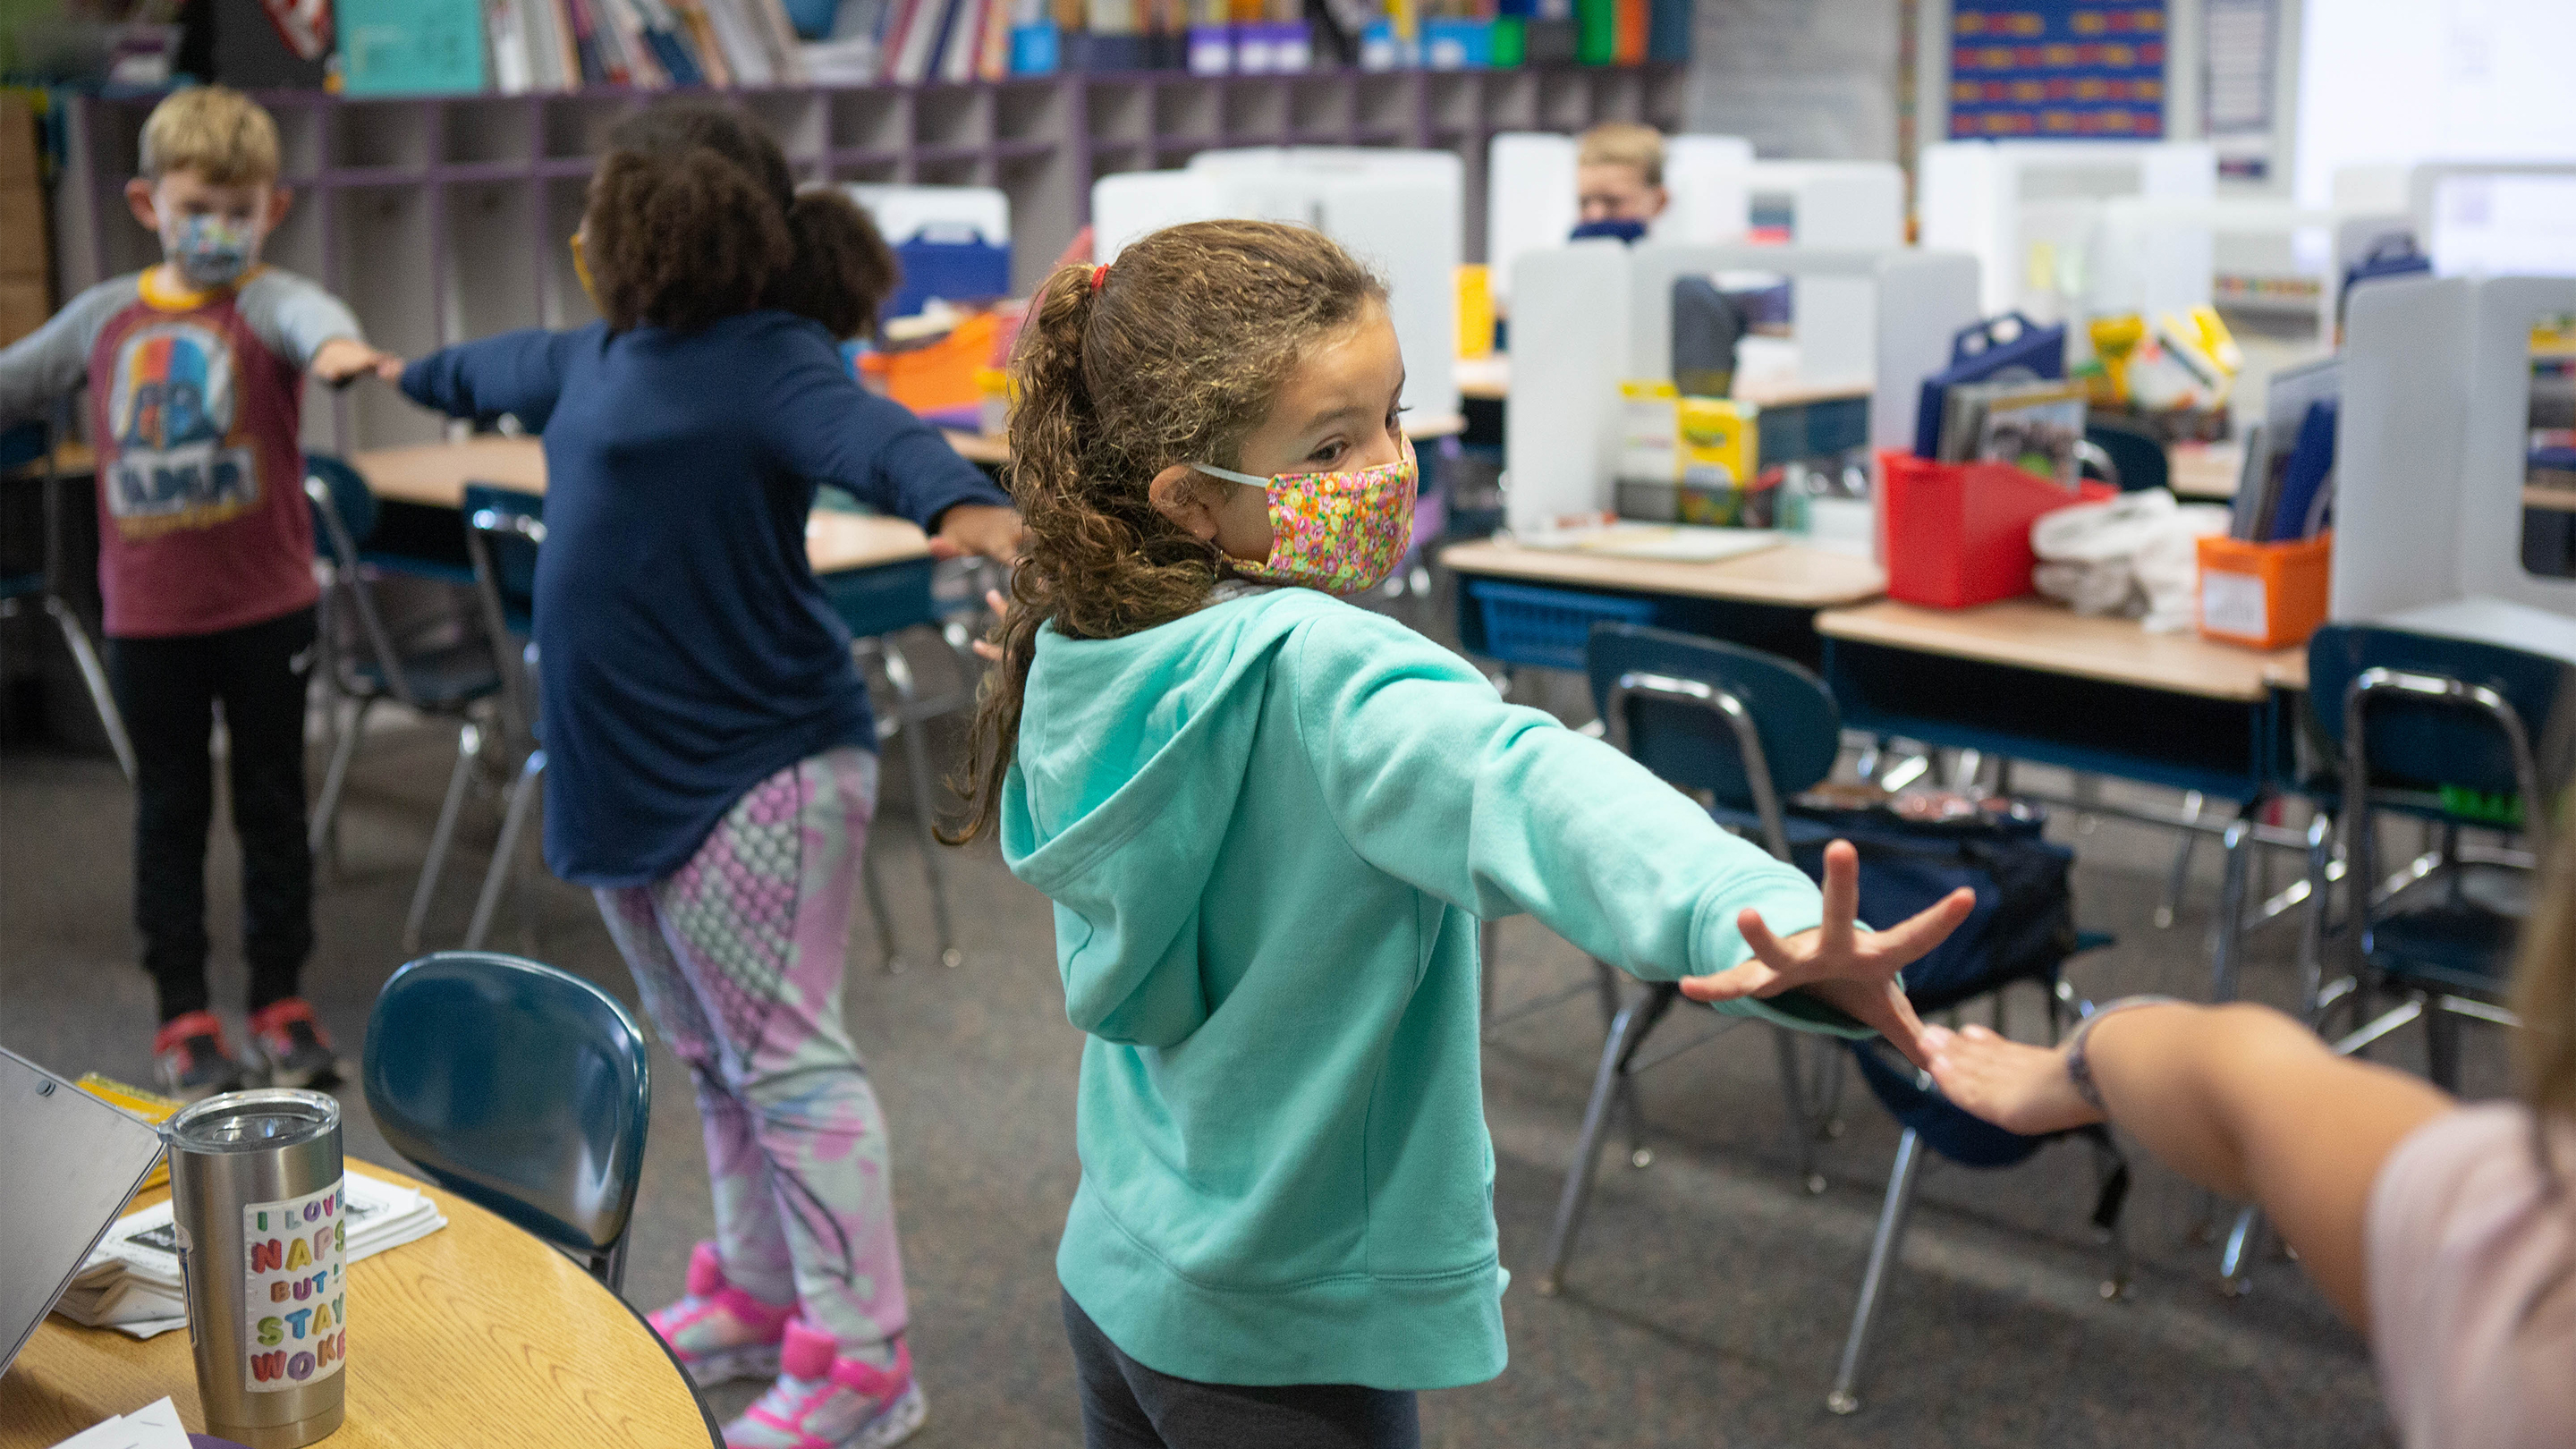 14 Essentials for Elementary Teachers : The Contemporary Classroom